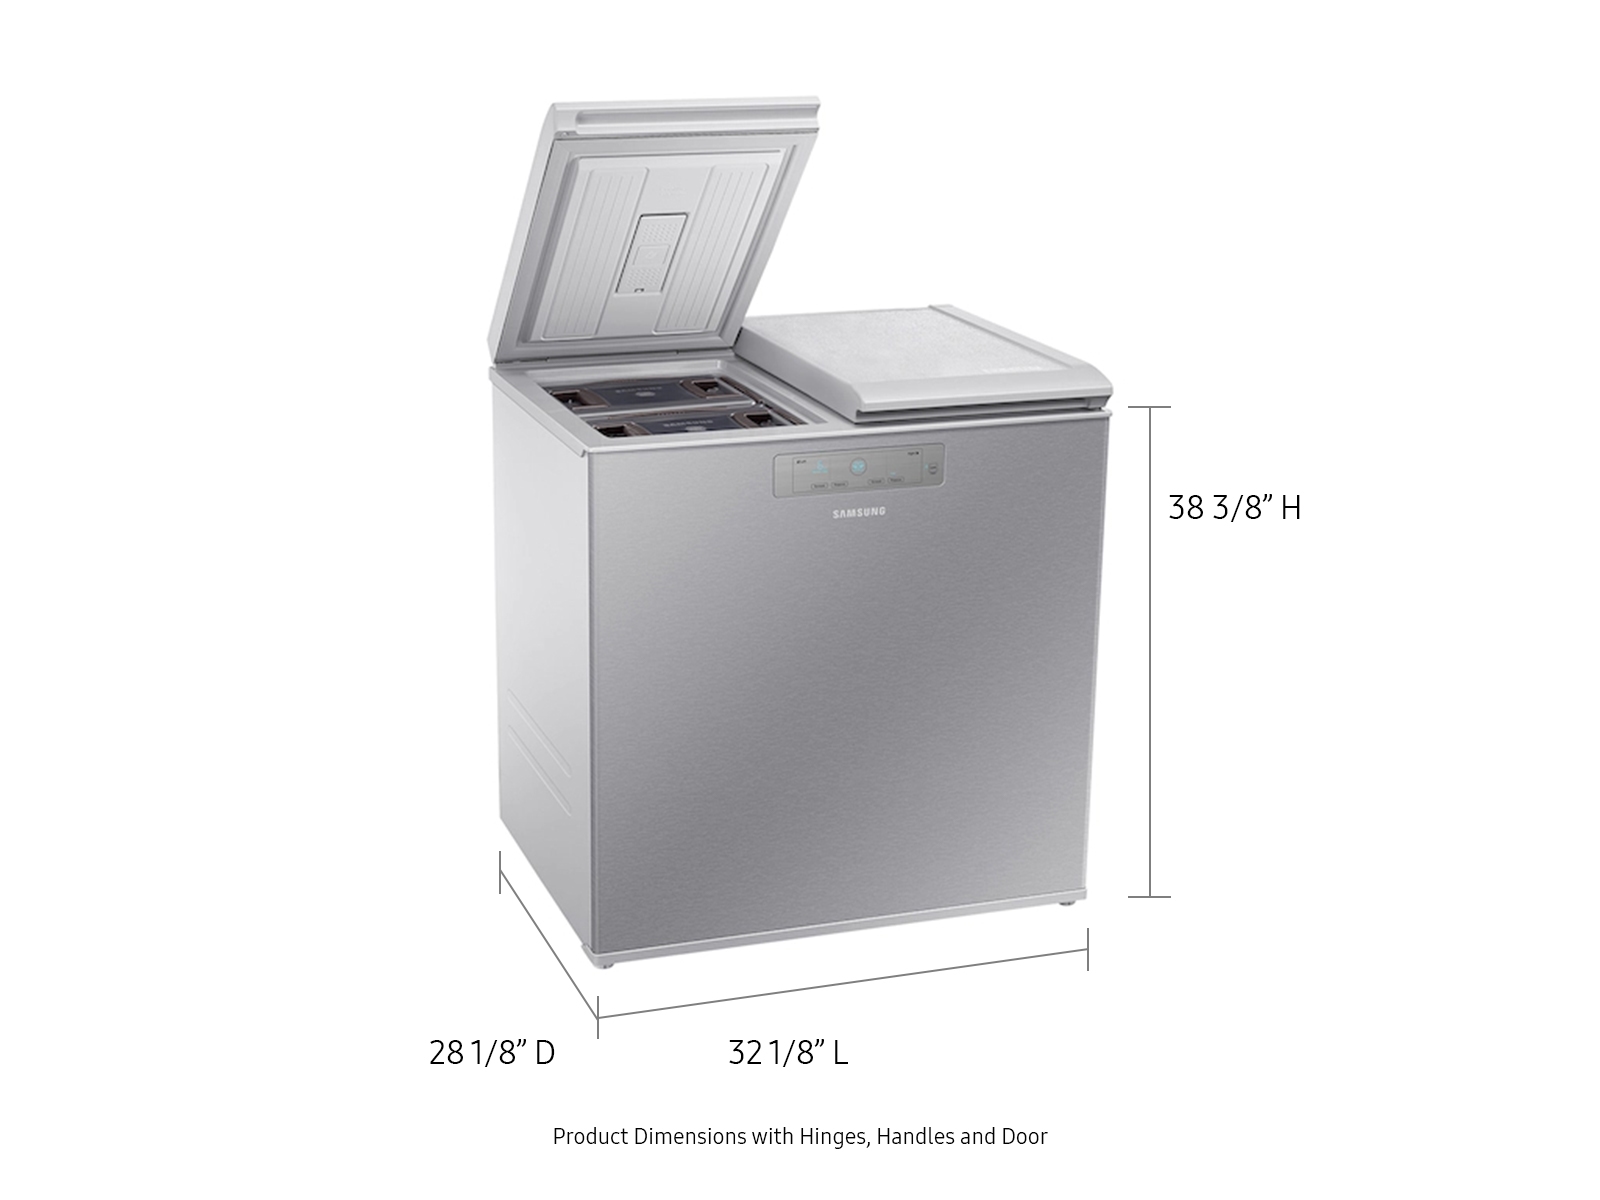 https://image-us.samsung.com/SamsungUS/home/home-appliances/refrigerators/pdp/10142021/Refrigerator_RP22T31137Z-AA_38-3-8x32-1-8x28-1-8.jpg?$product-details-jpg$